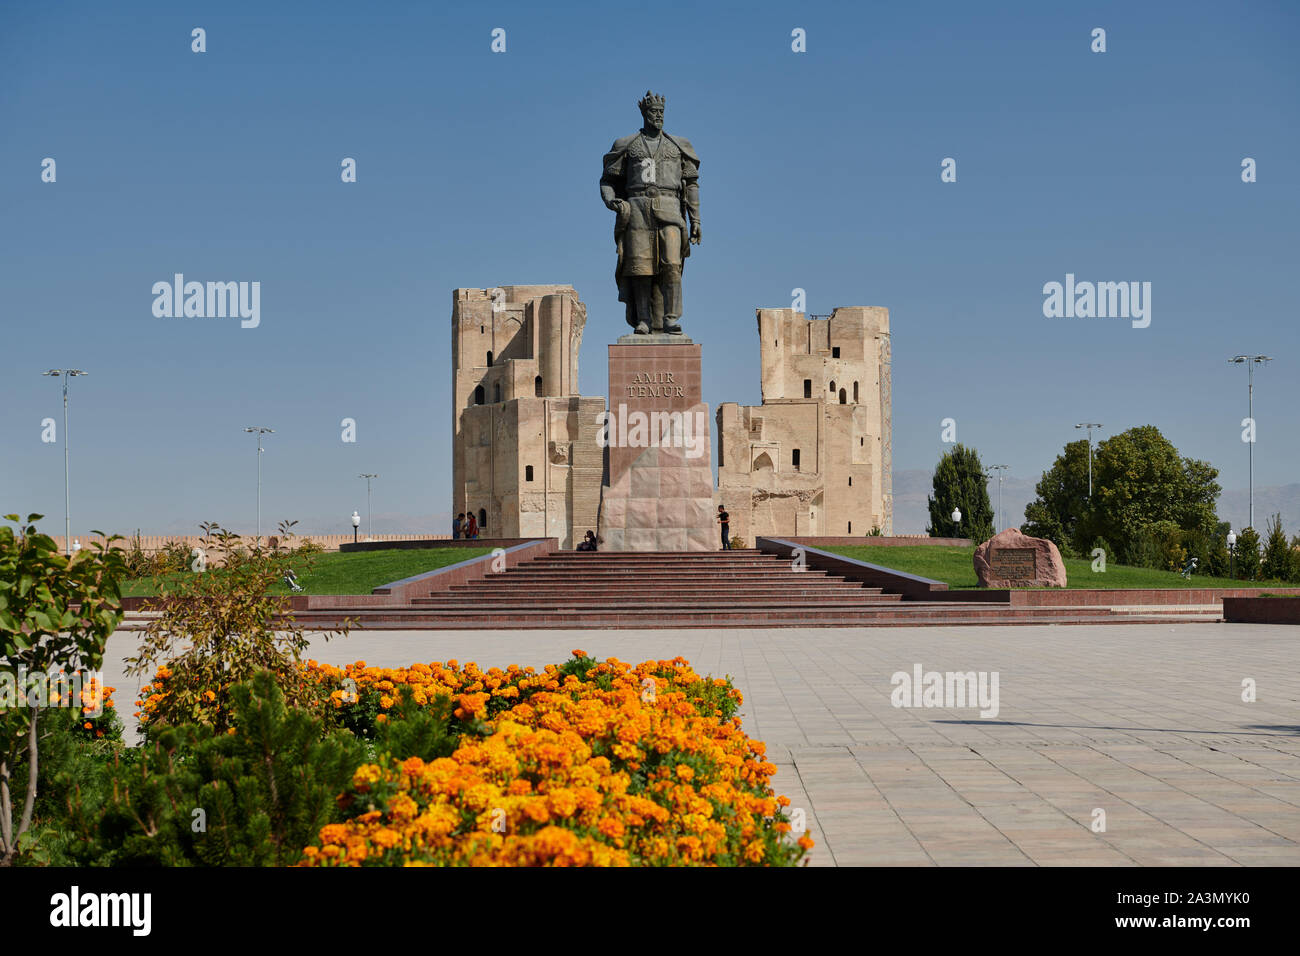 Statue of Amir Timur, Shahrisabz, Uzbekistan, Central Asia Stock Photo